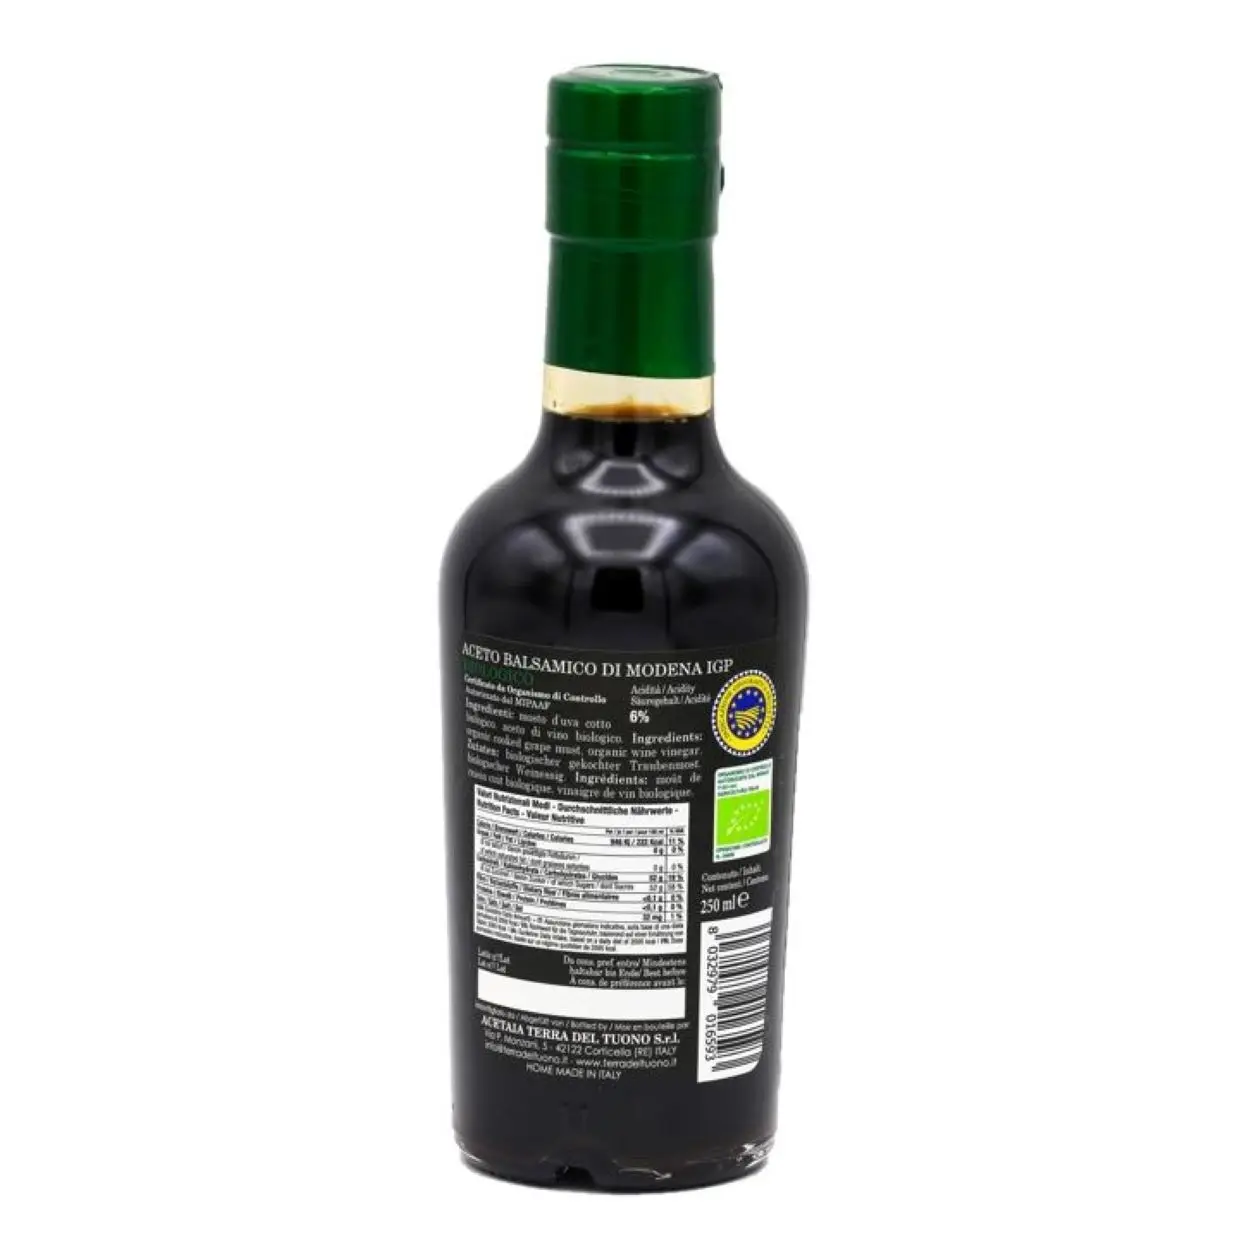 Premium Quality Italian Organic Balsamic Vinegar of Modena IGP 250 ml